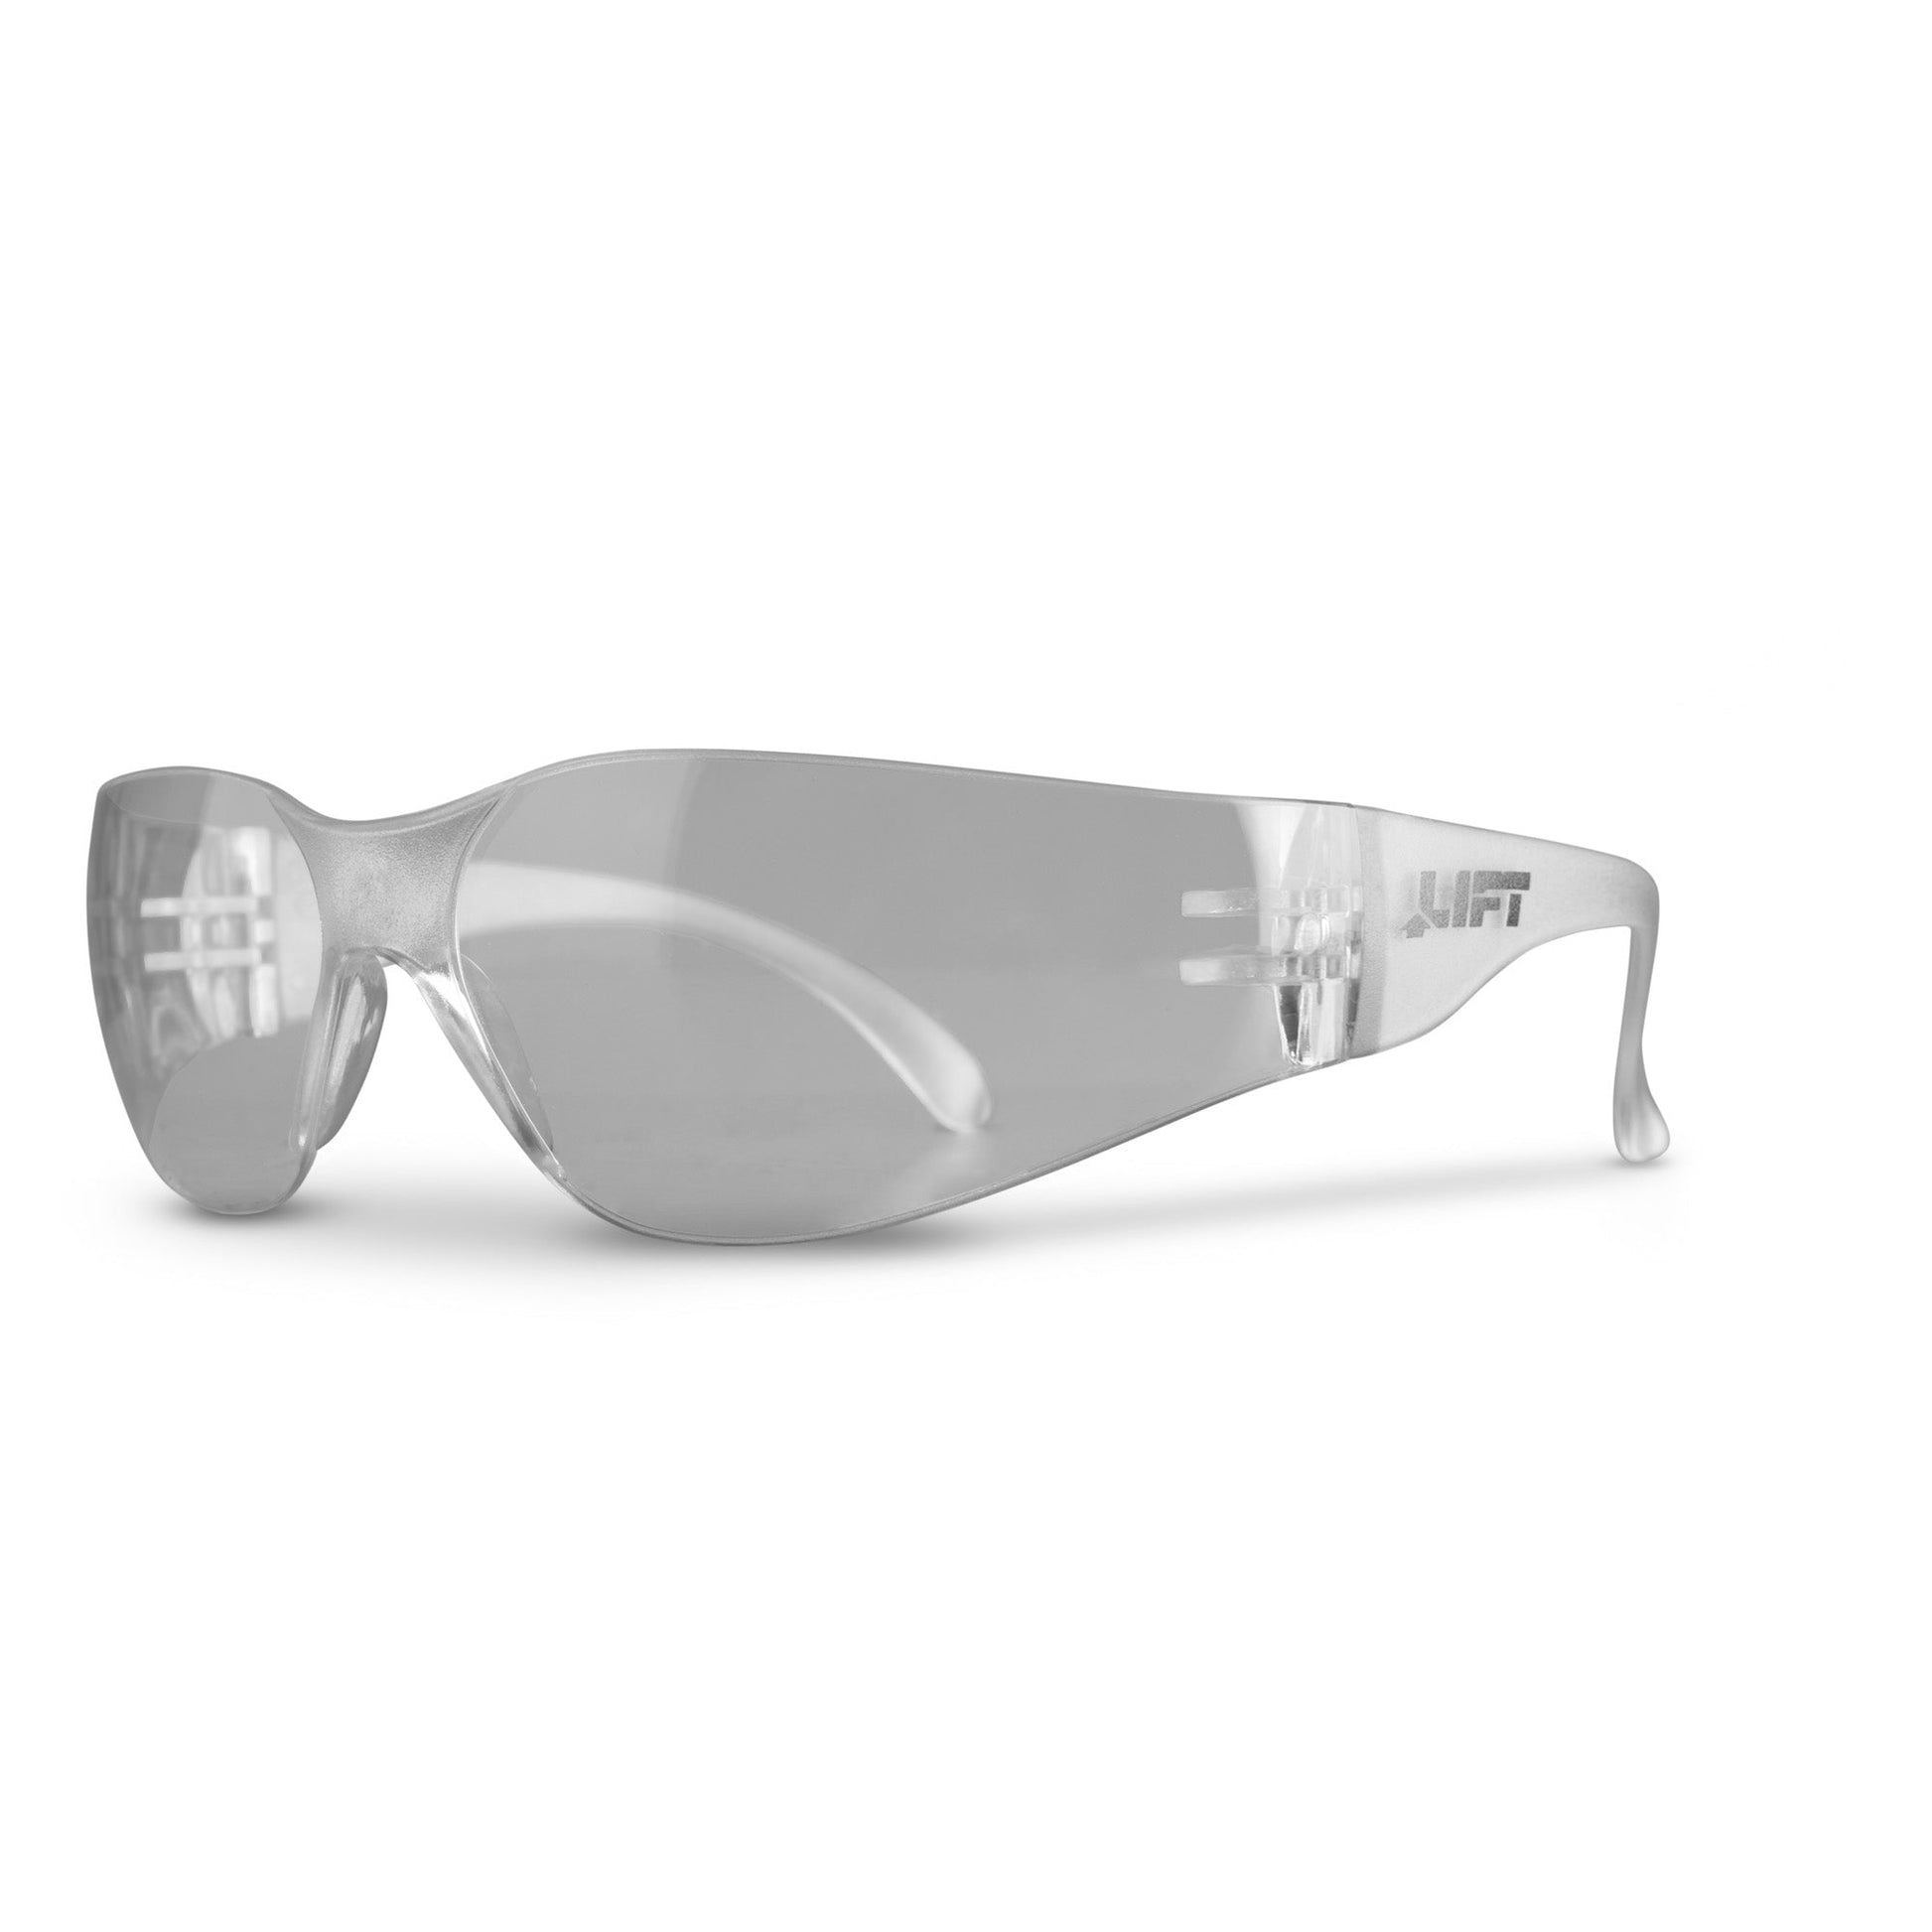 LIFT Safety - Tear-Off Safety Glasses